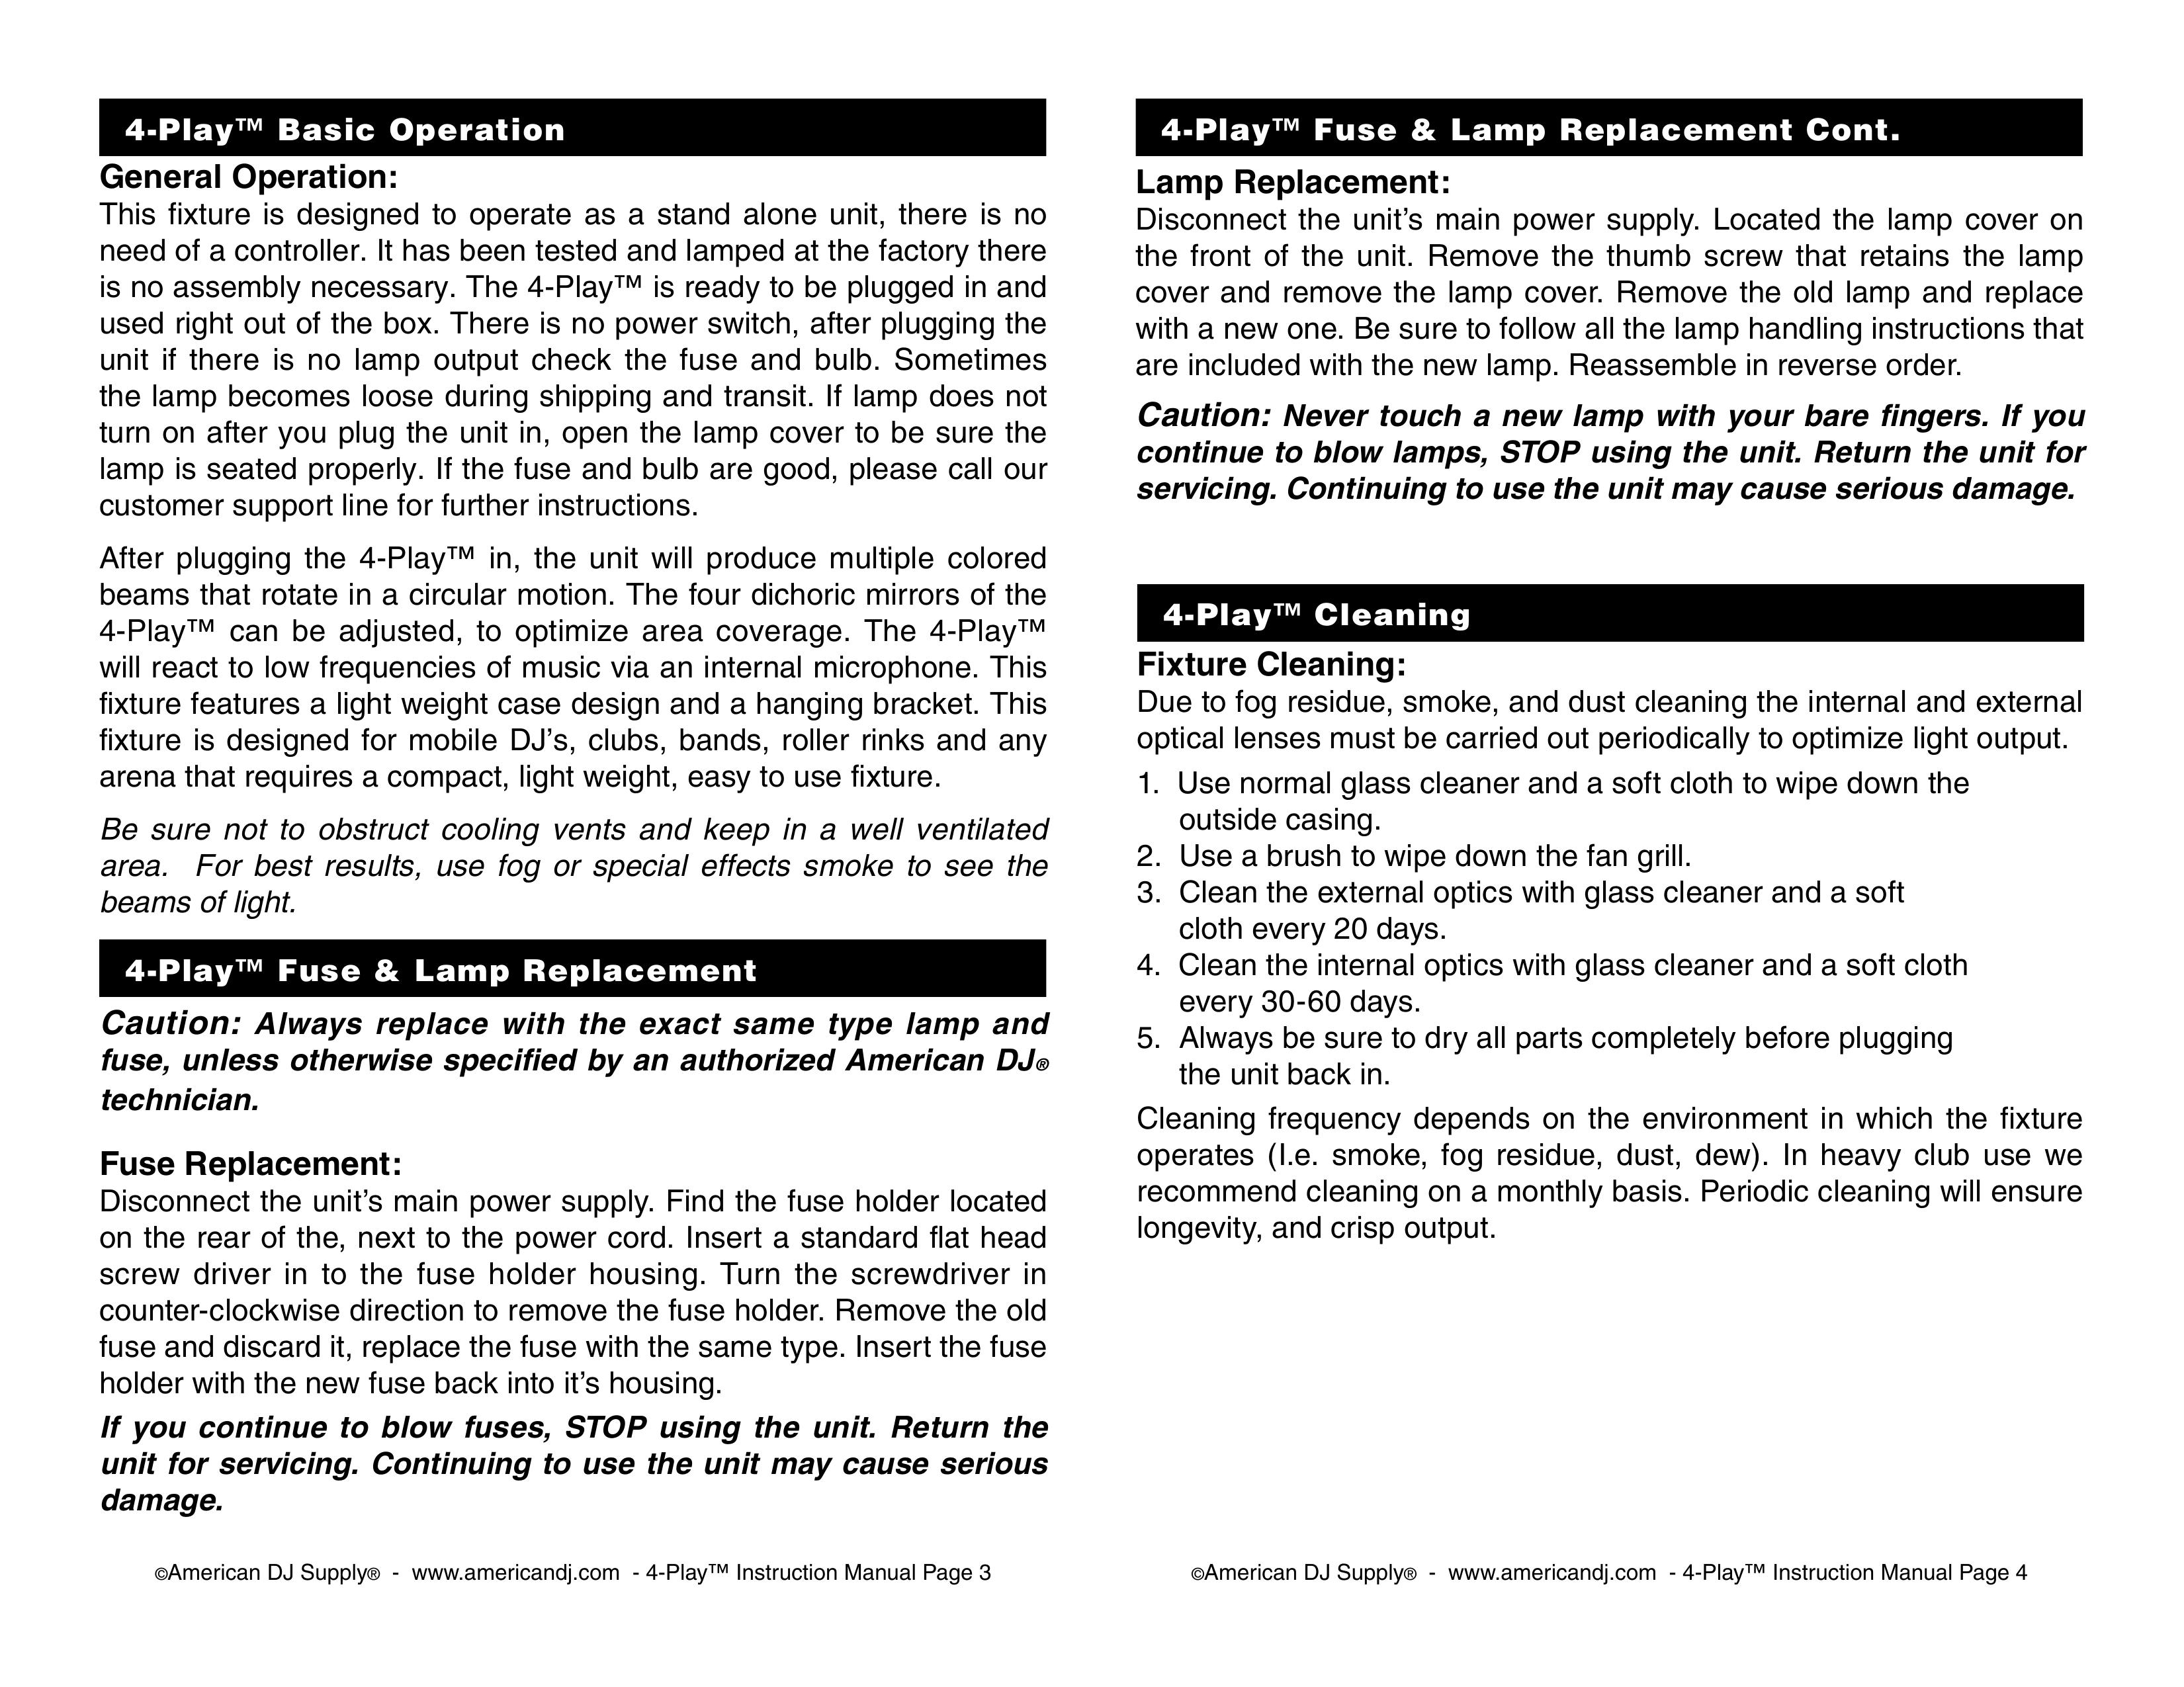 American DJ 4Play DJ Equipment User Manual (Page 2)